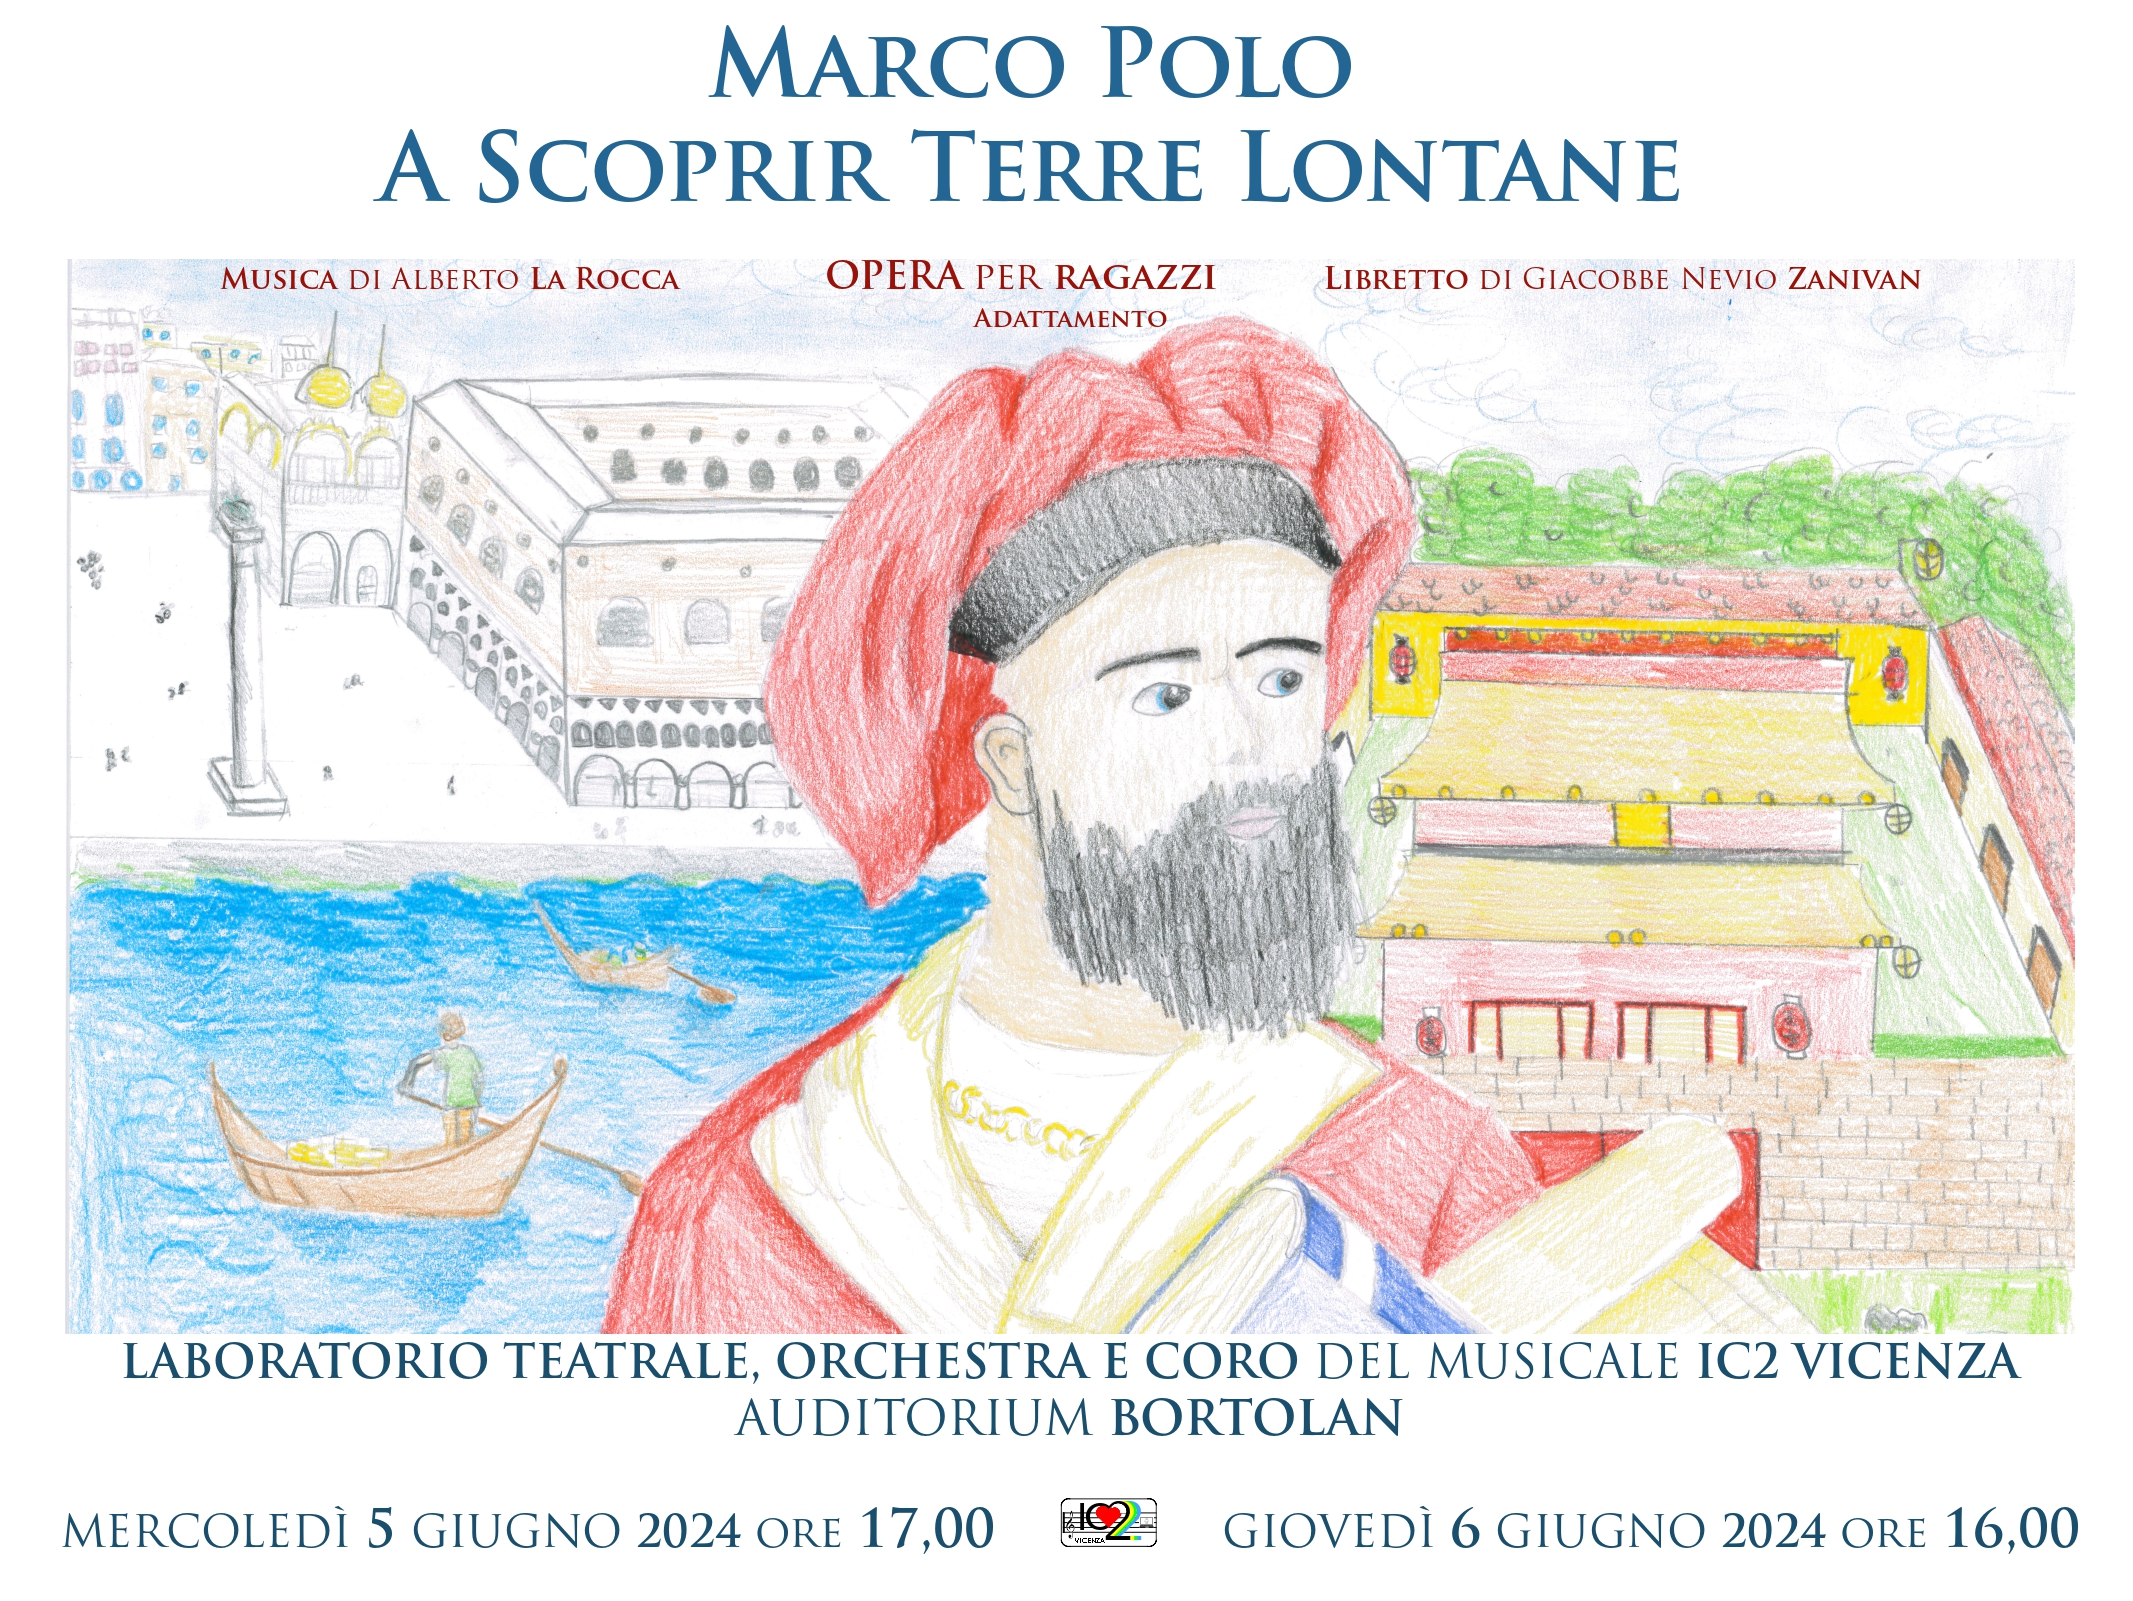 Locandina Marco Polo_page-0001.jpg